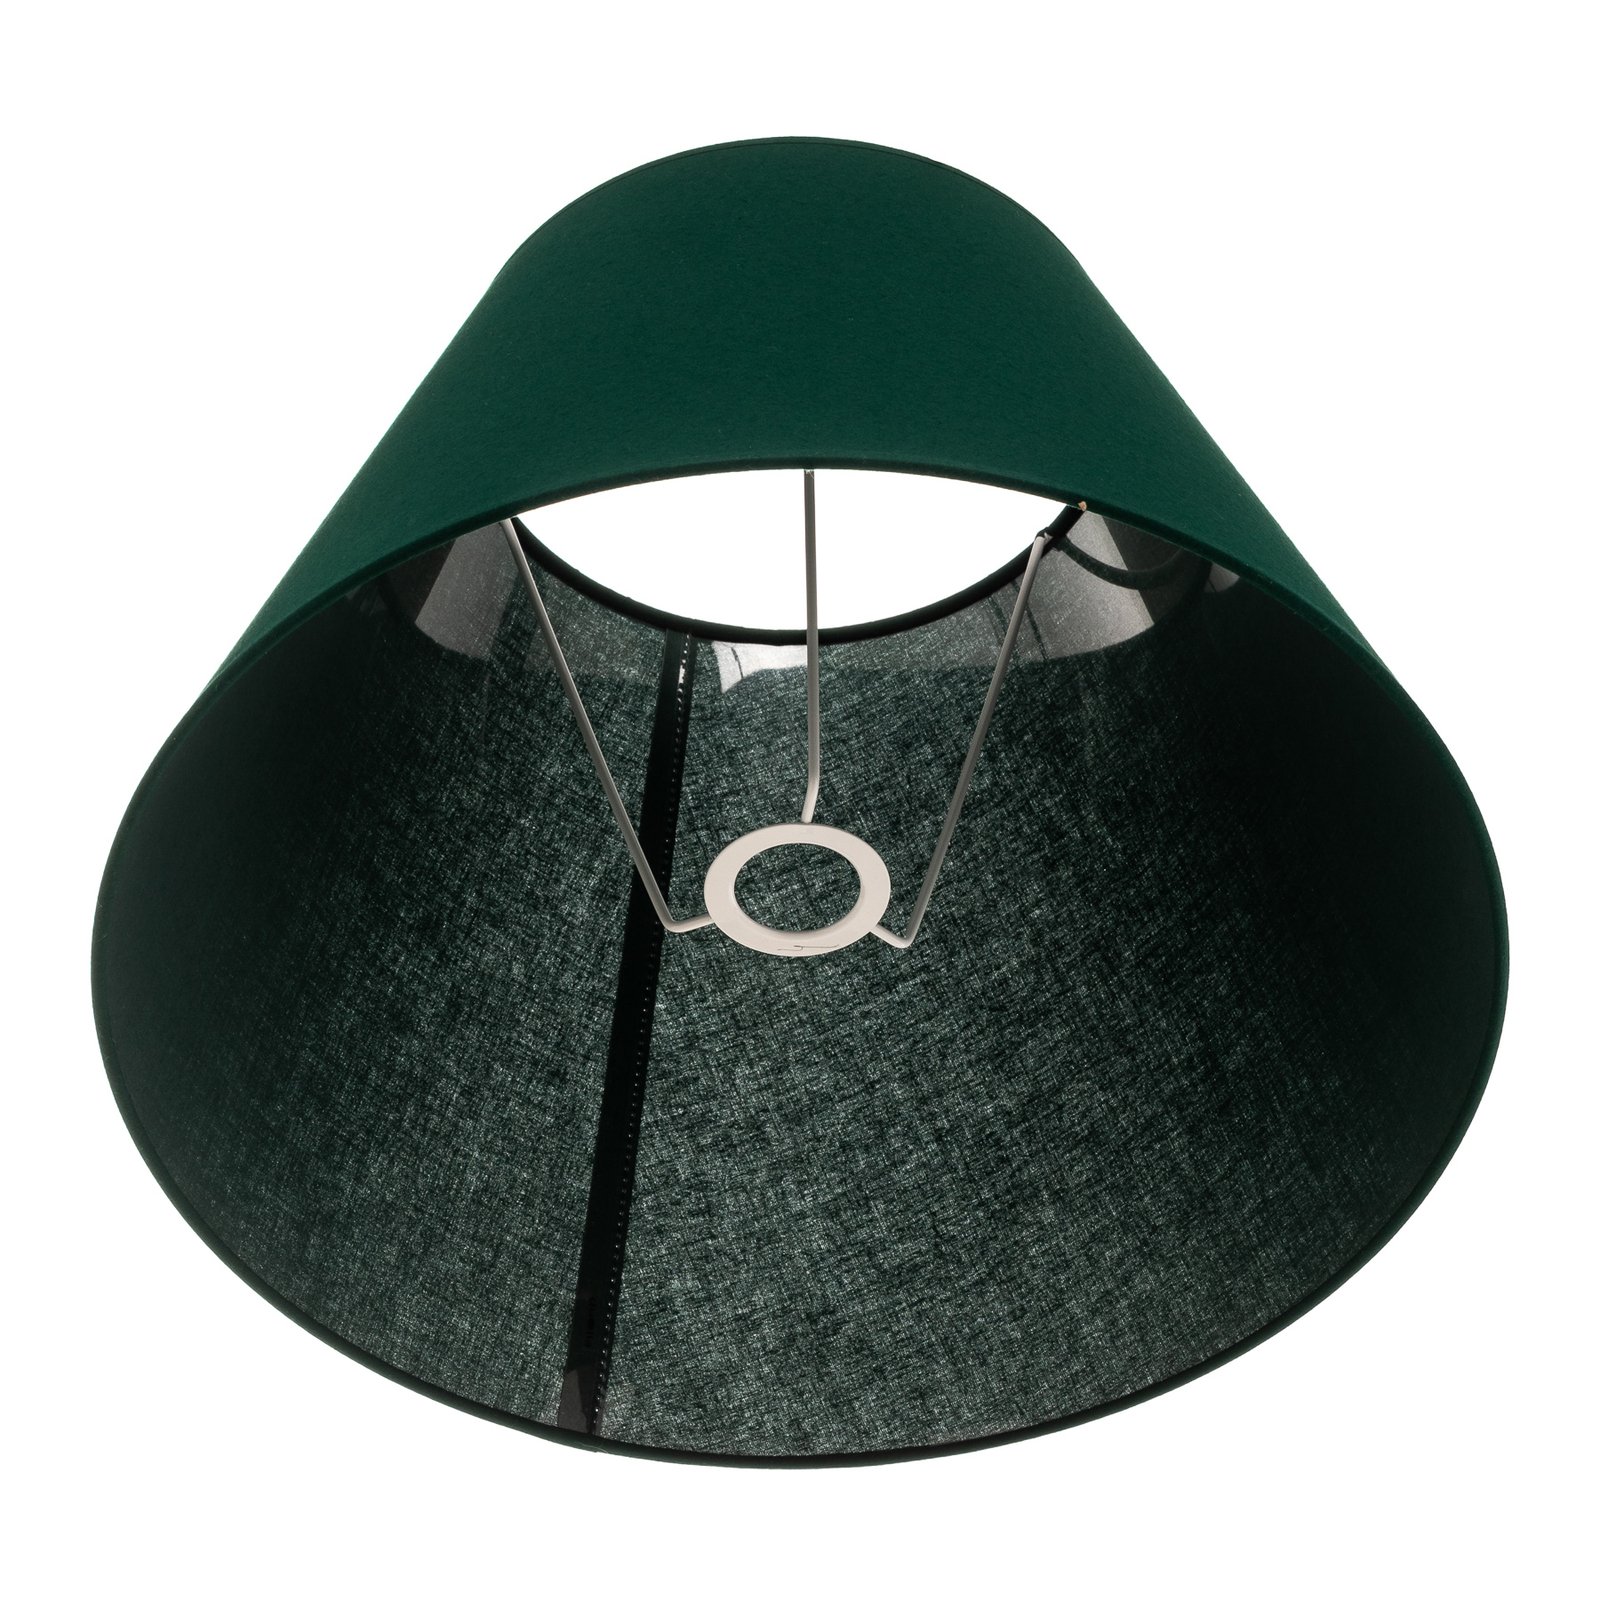 Pseudosofia lampshade for floor lamp green